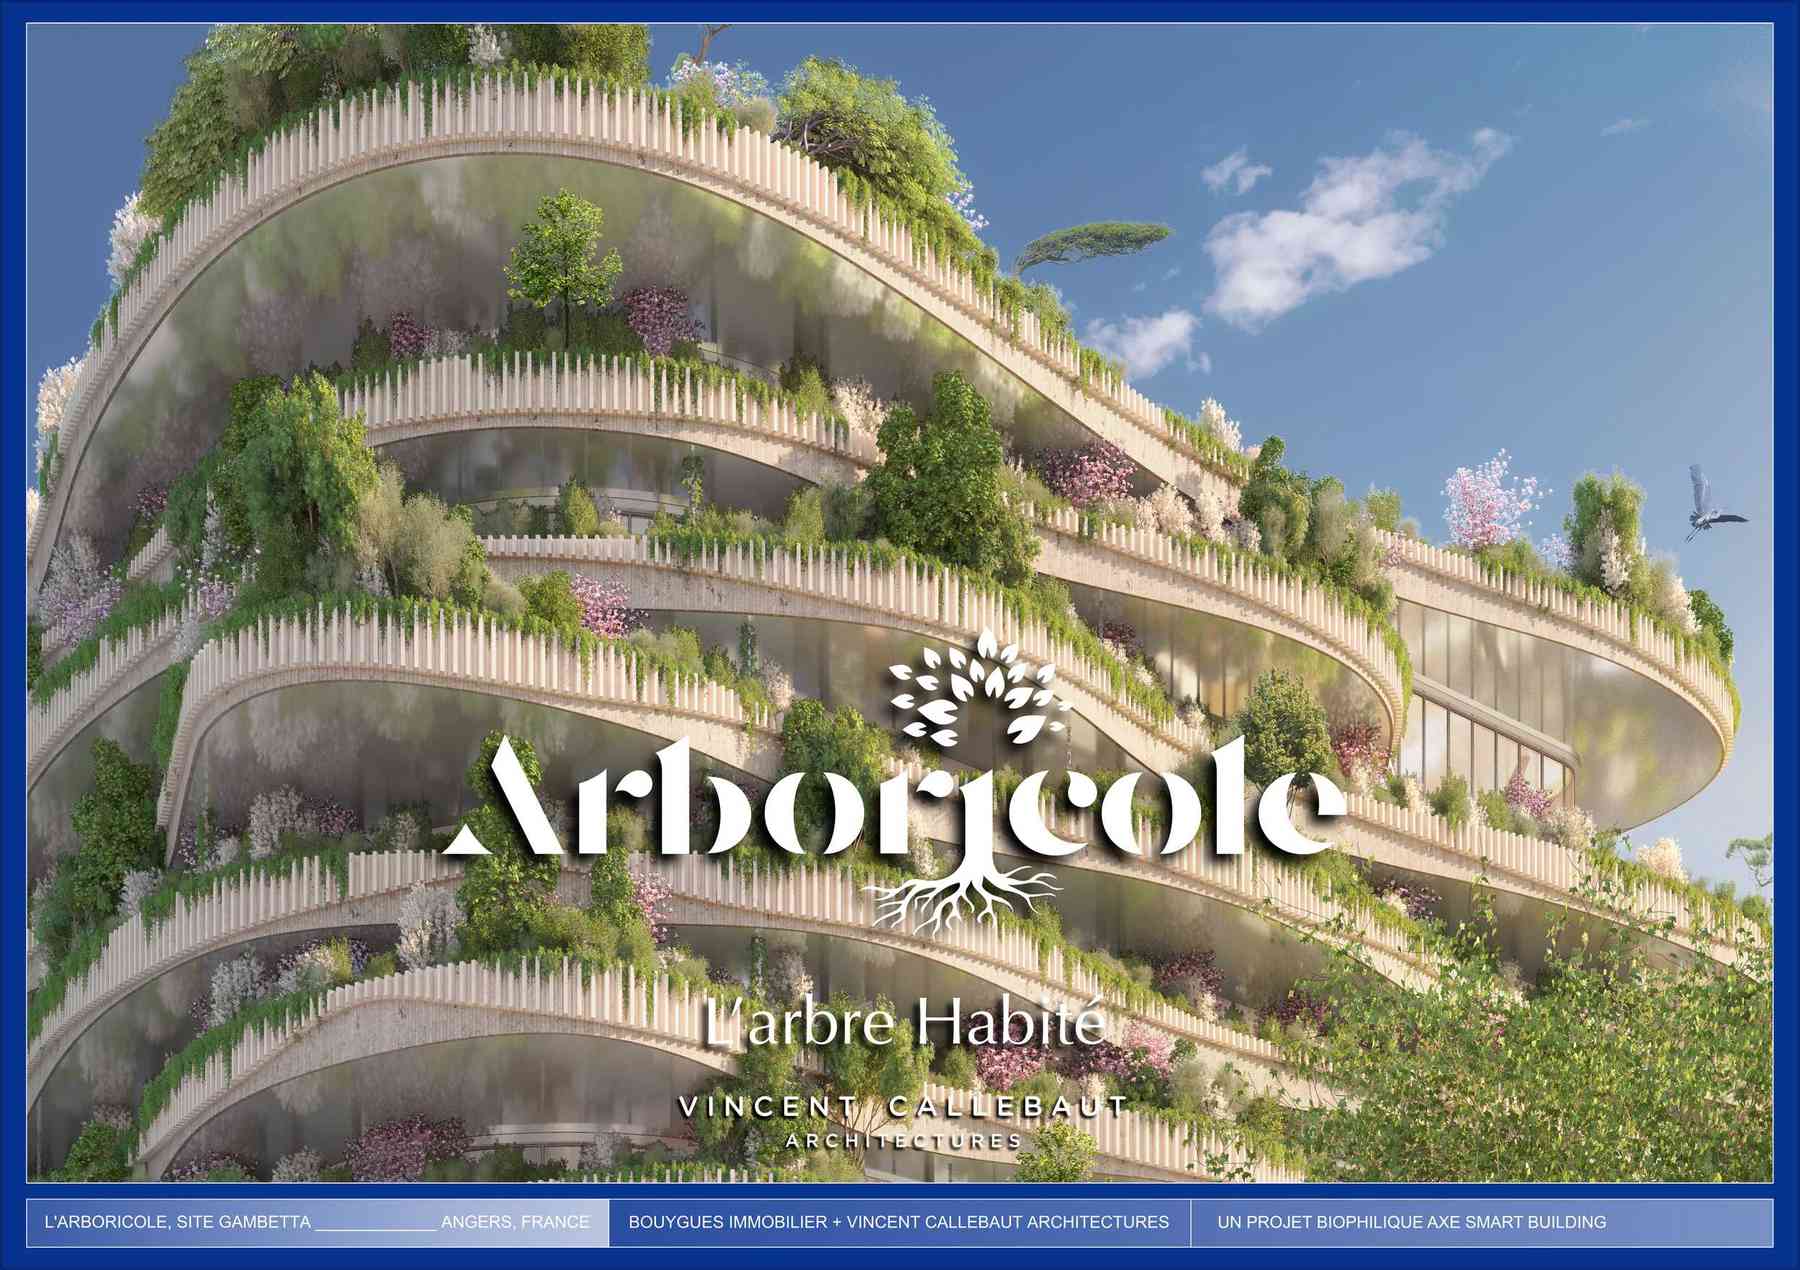 180314_arboricole-new_pl001